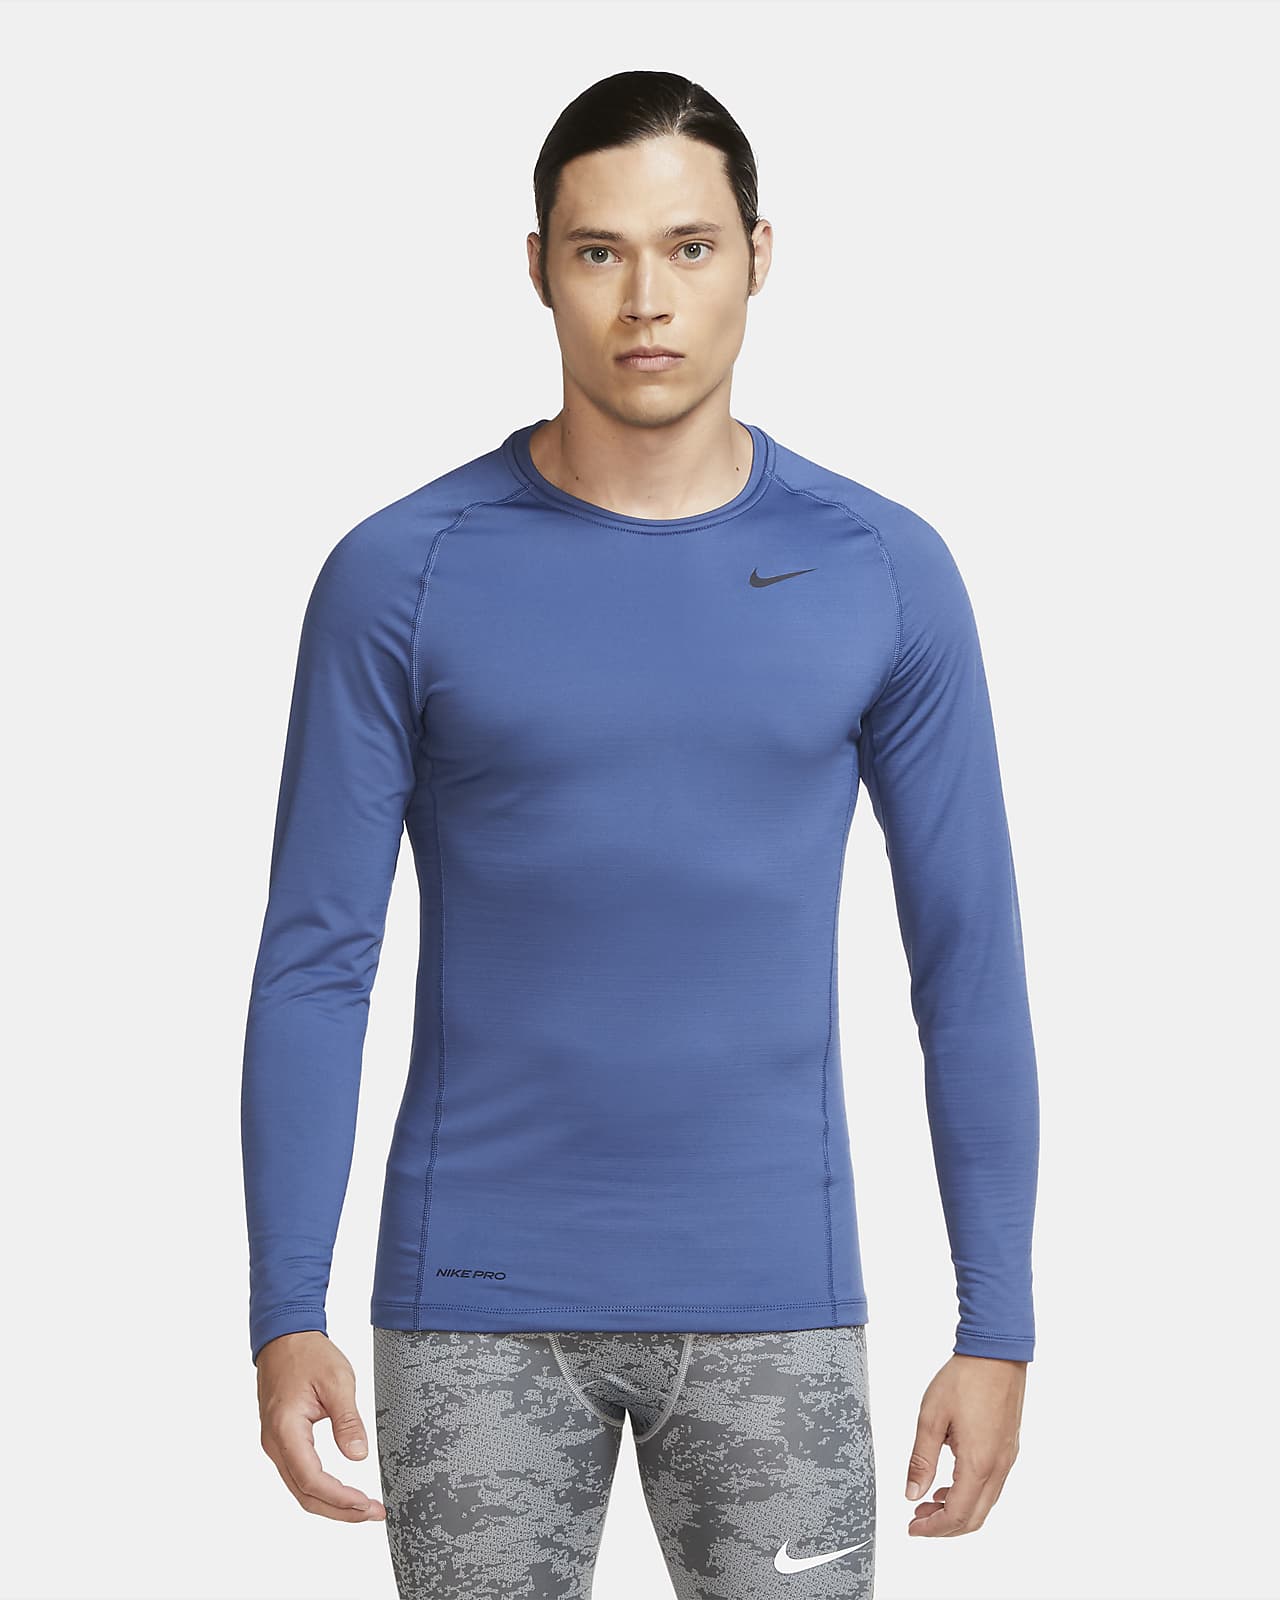 Nike Pro Warm Men's Long-Sleeve Top. Nike.com